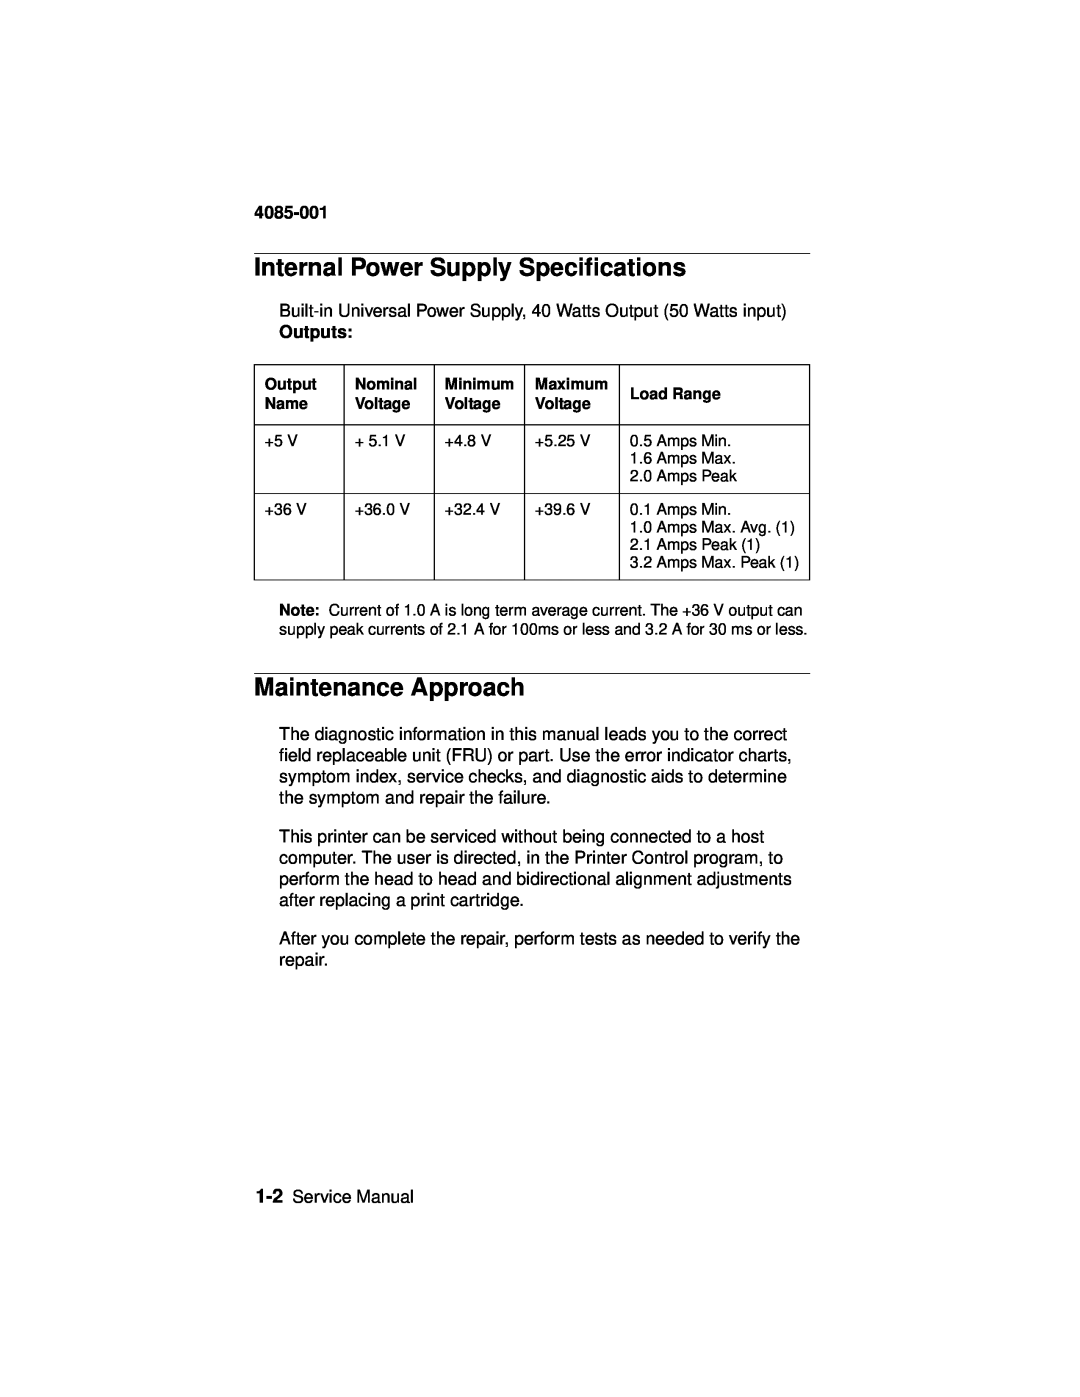 Lexmark J110, Printer manual Internal Power Supply Specifications, Maintenance Approach, Outputs, 4085-001 